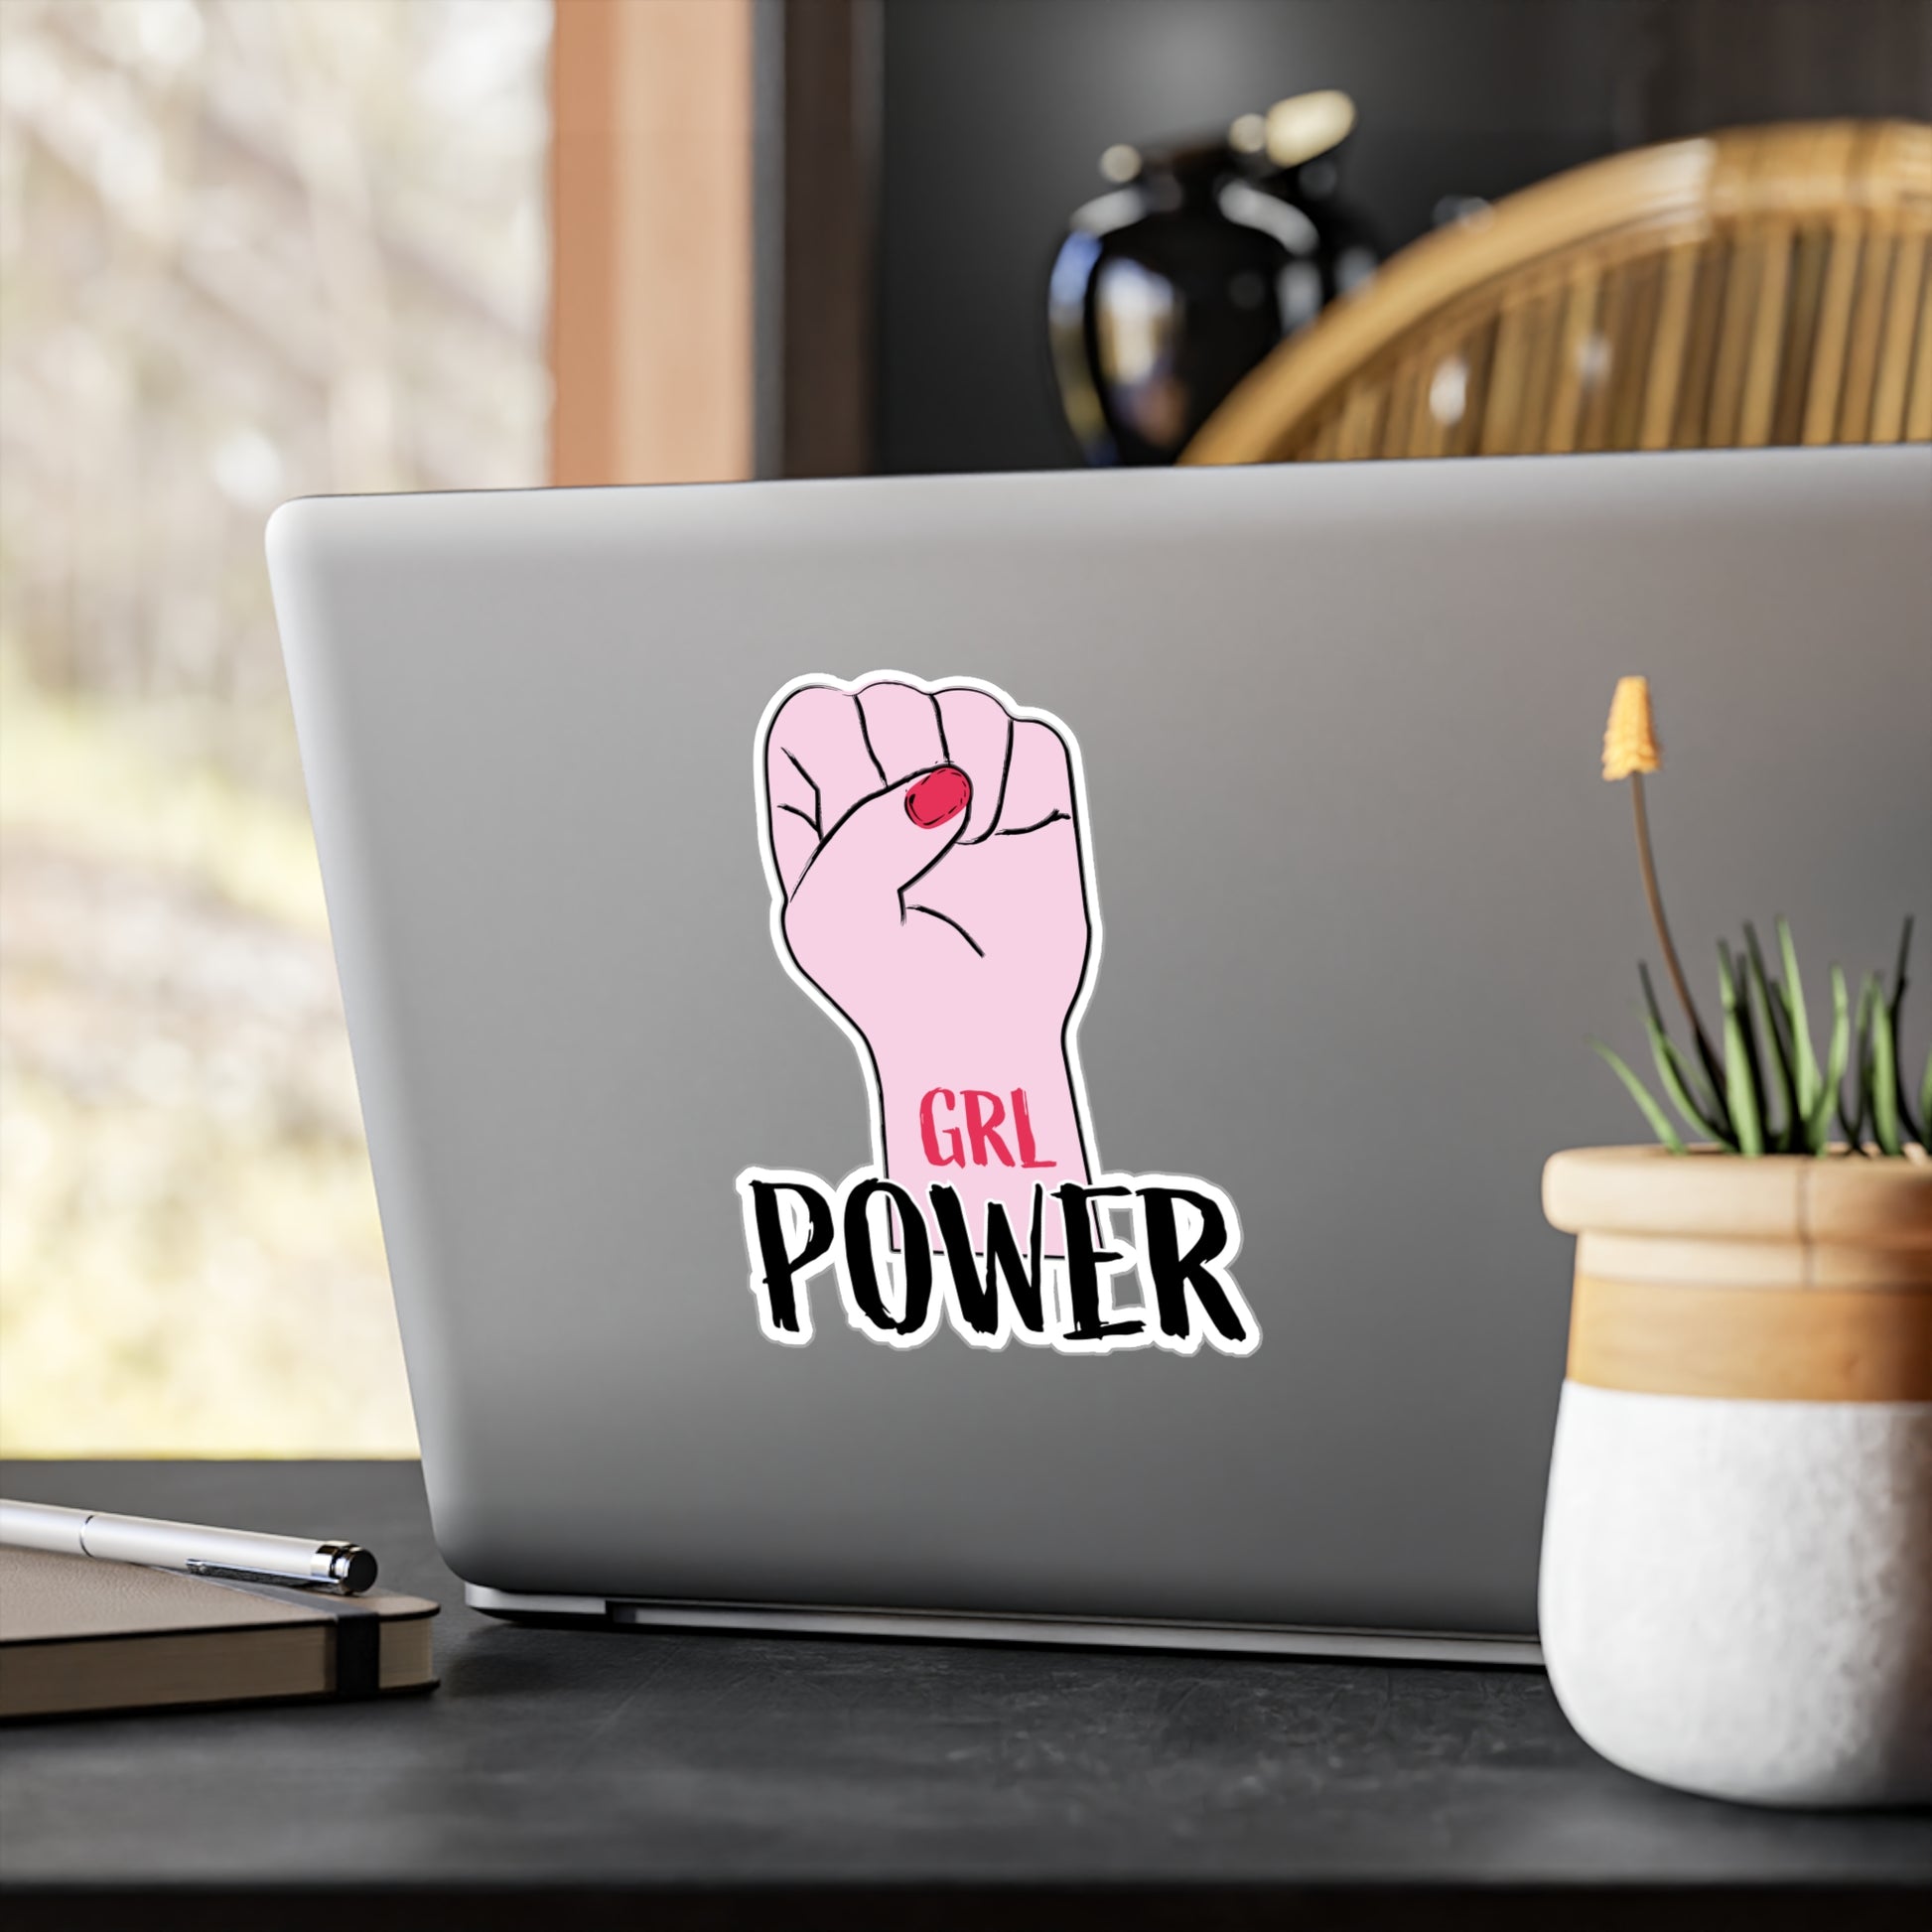 Grl Power Sticker - Motivational Treats